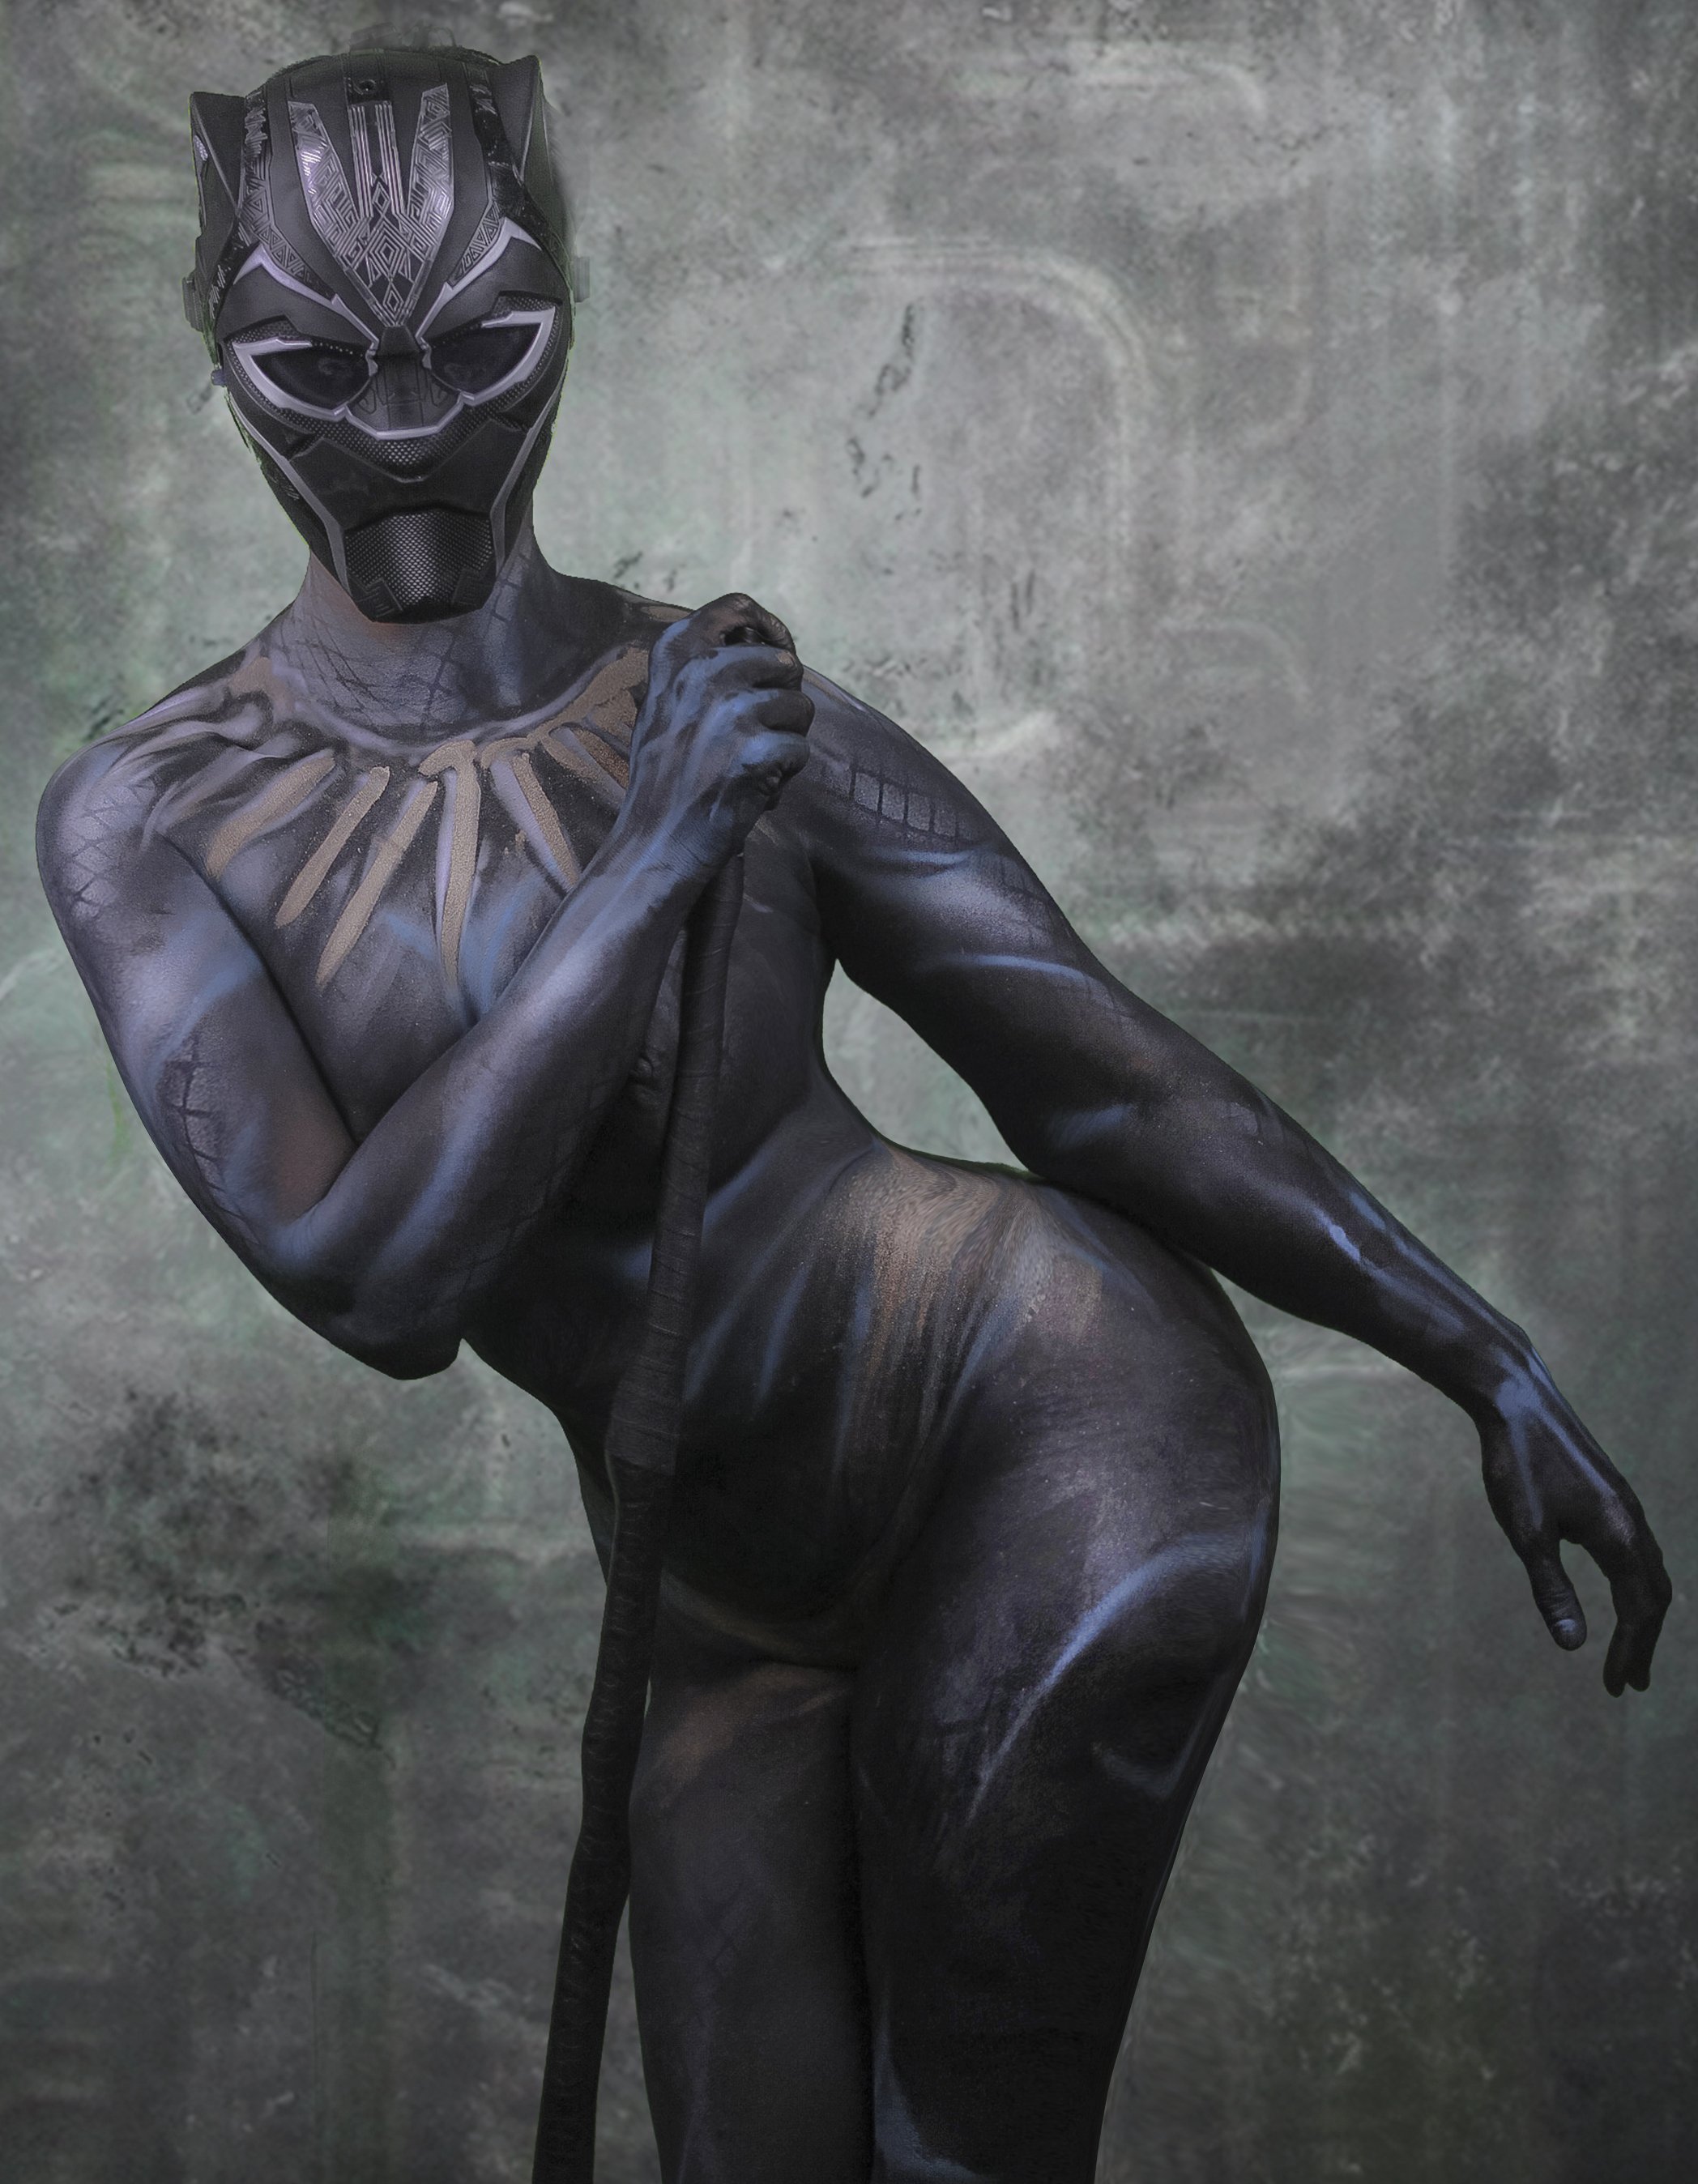 Black Panther [OC]